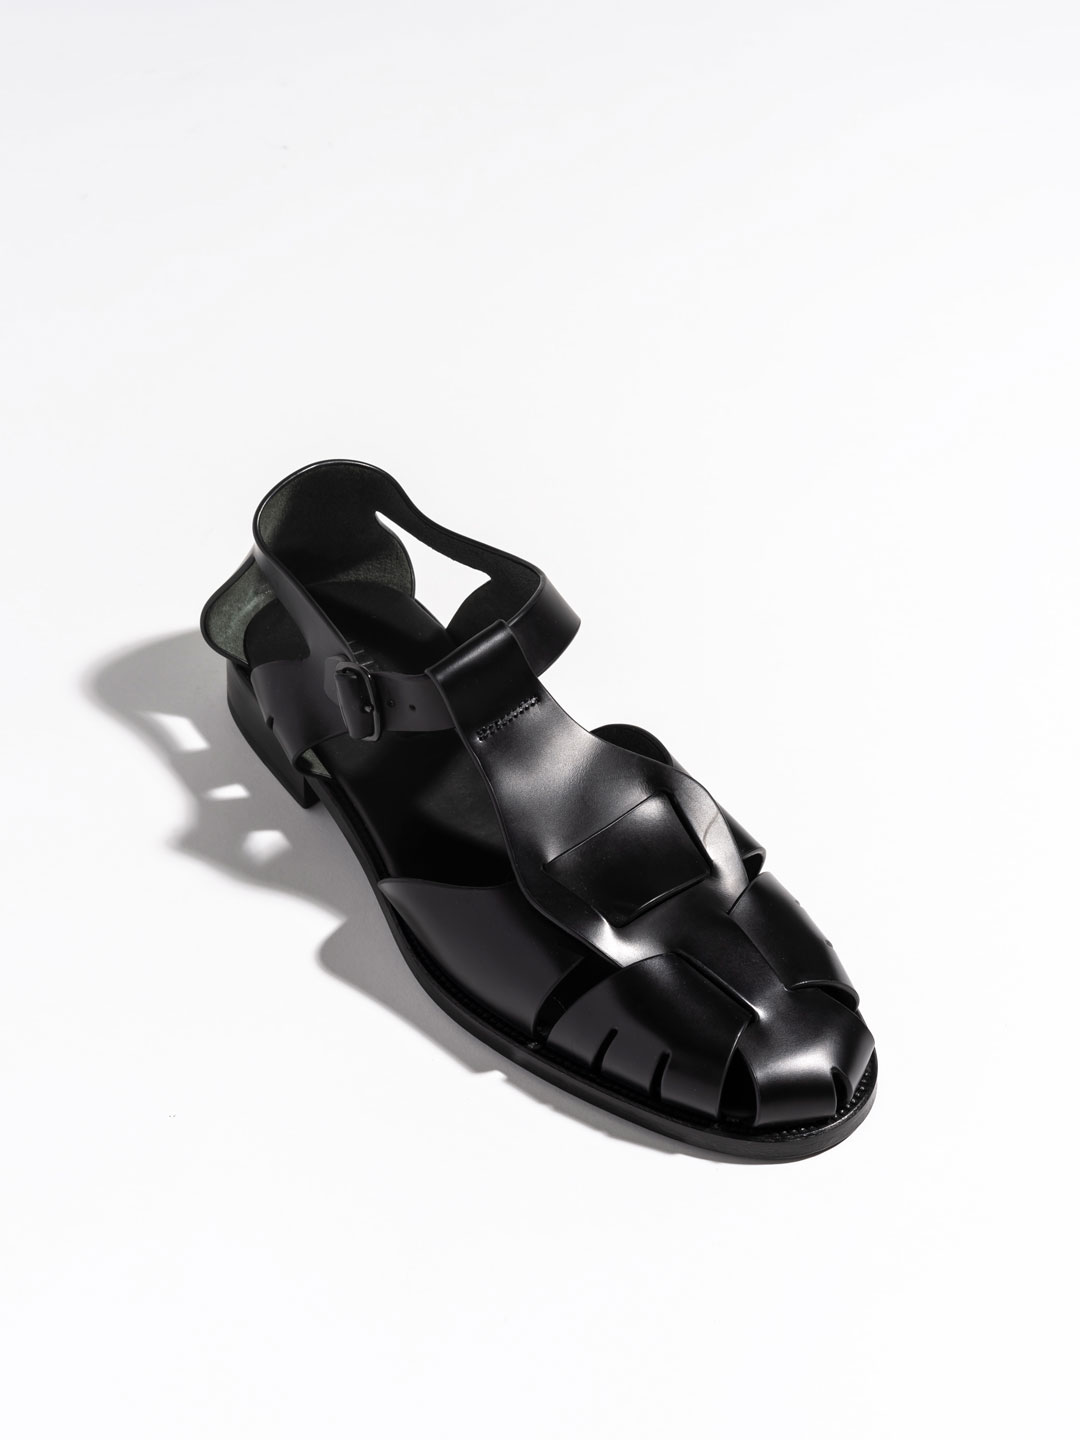 PESCA - Men's Fisherman Sandals - Black